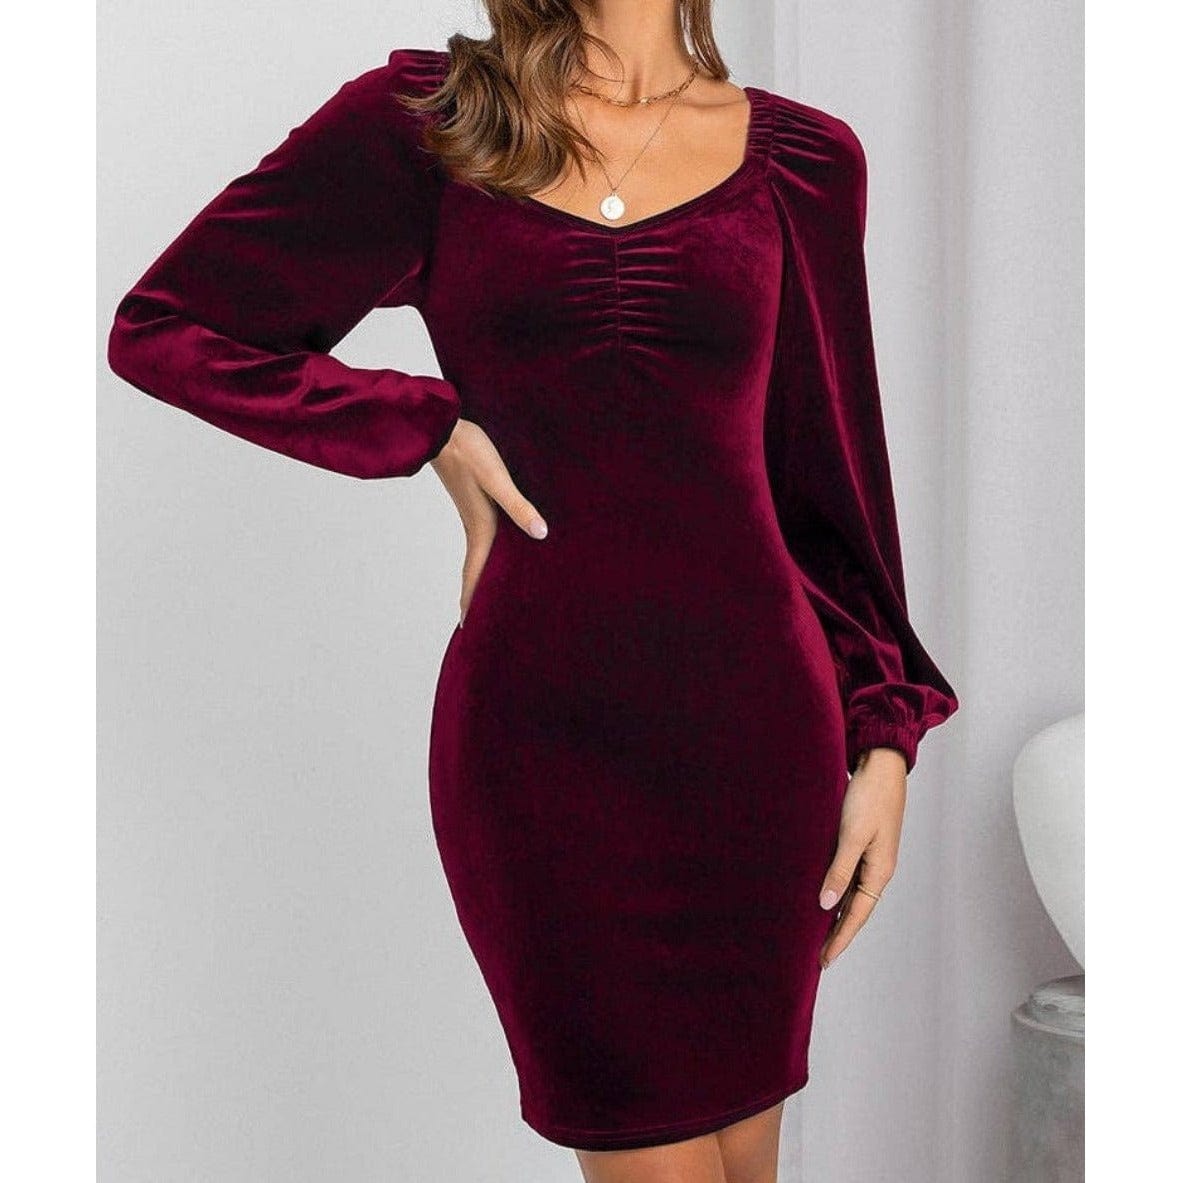 Felicity Red Wine Velvet Dress Short Dress TheFringeCultureCollective